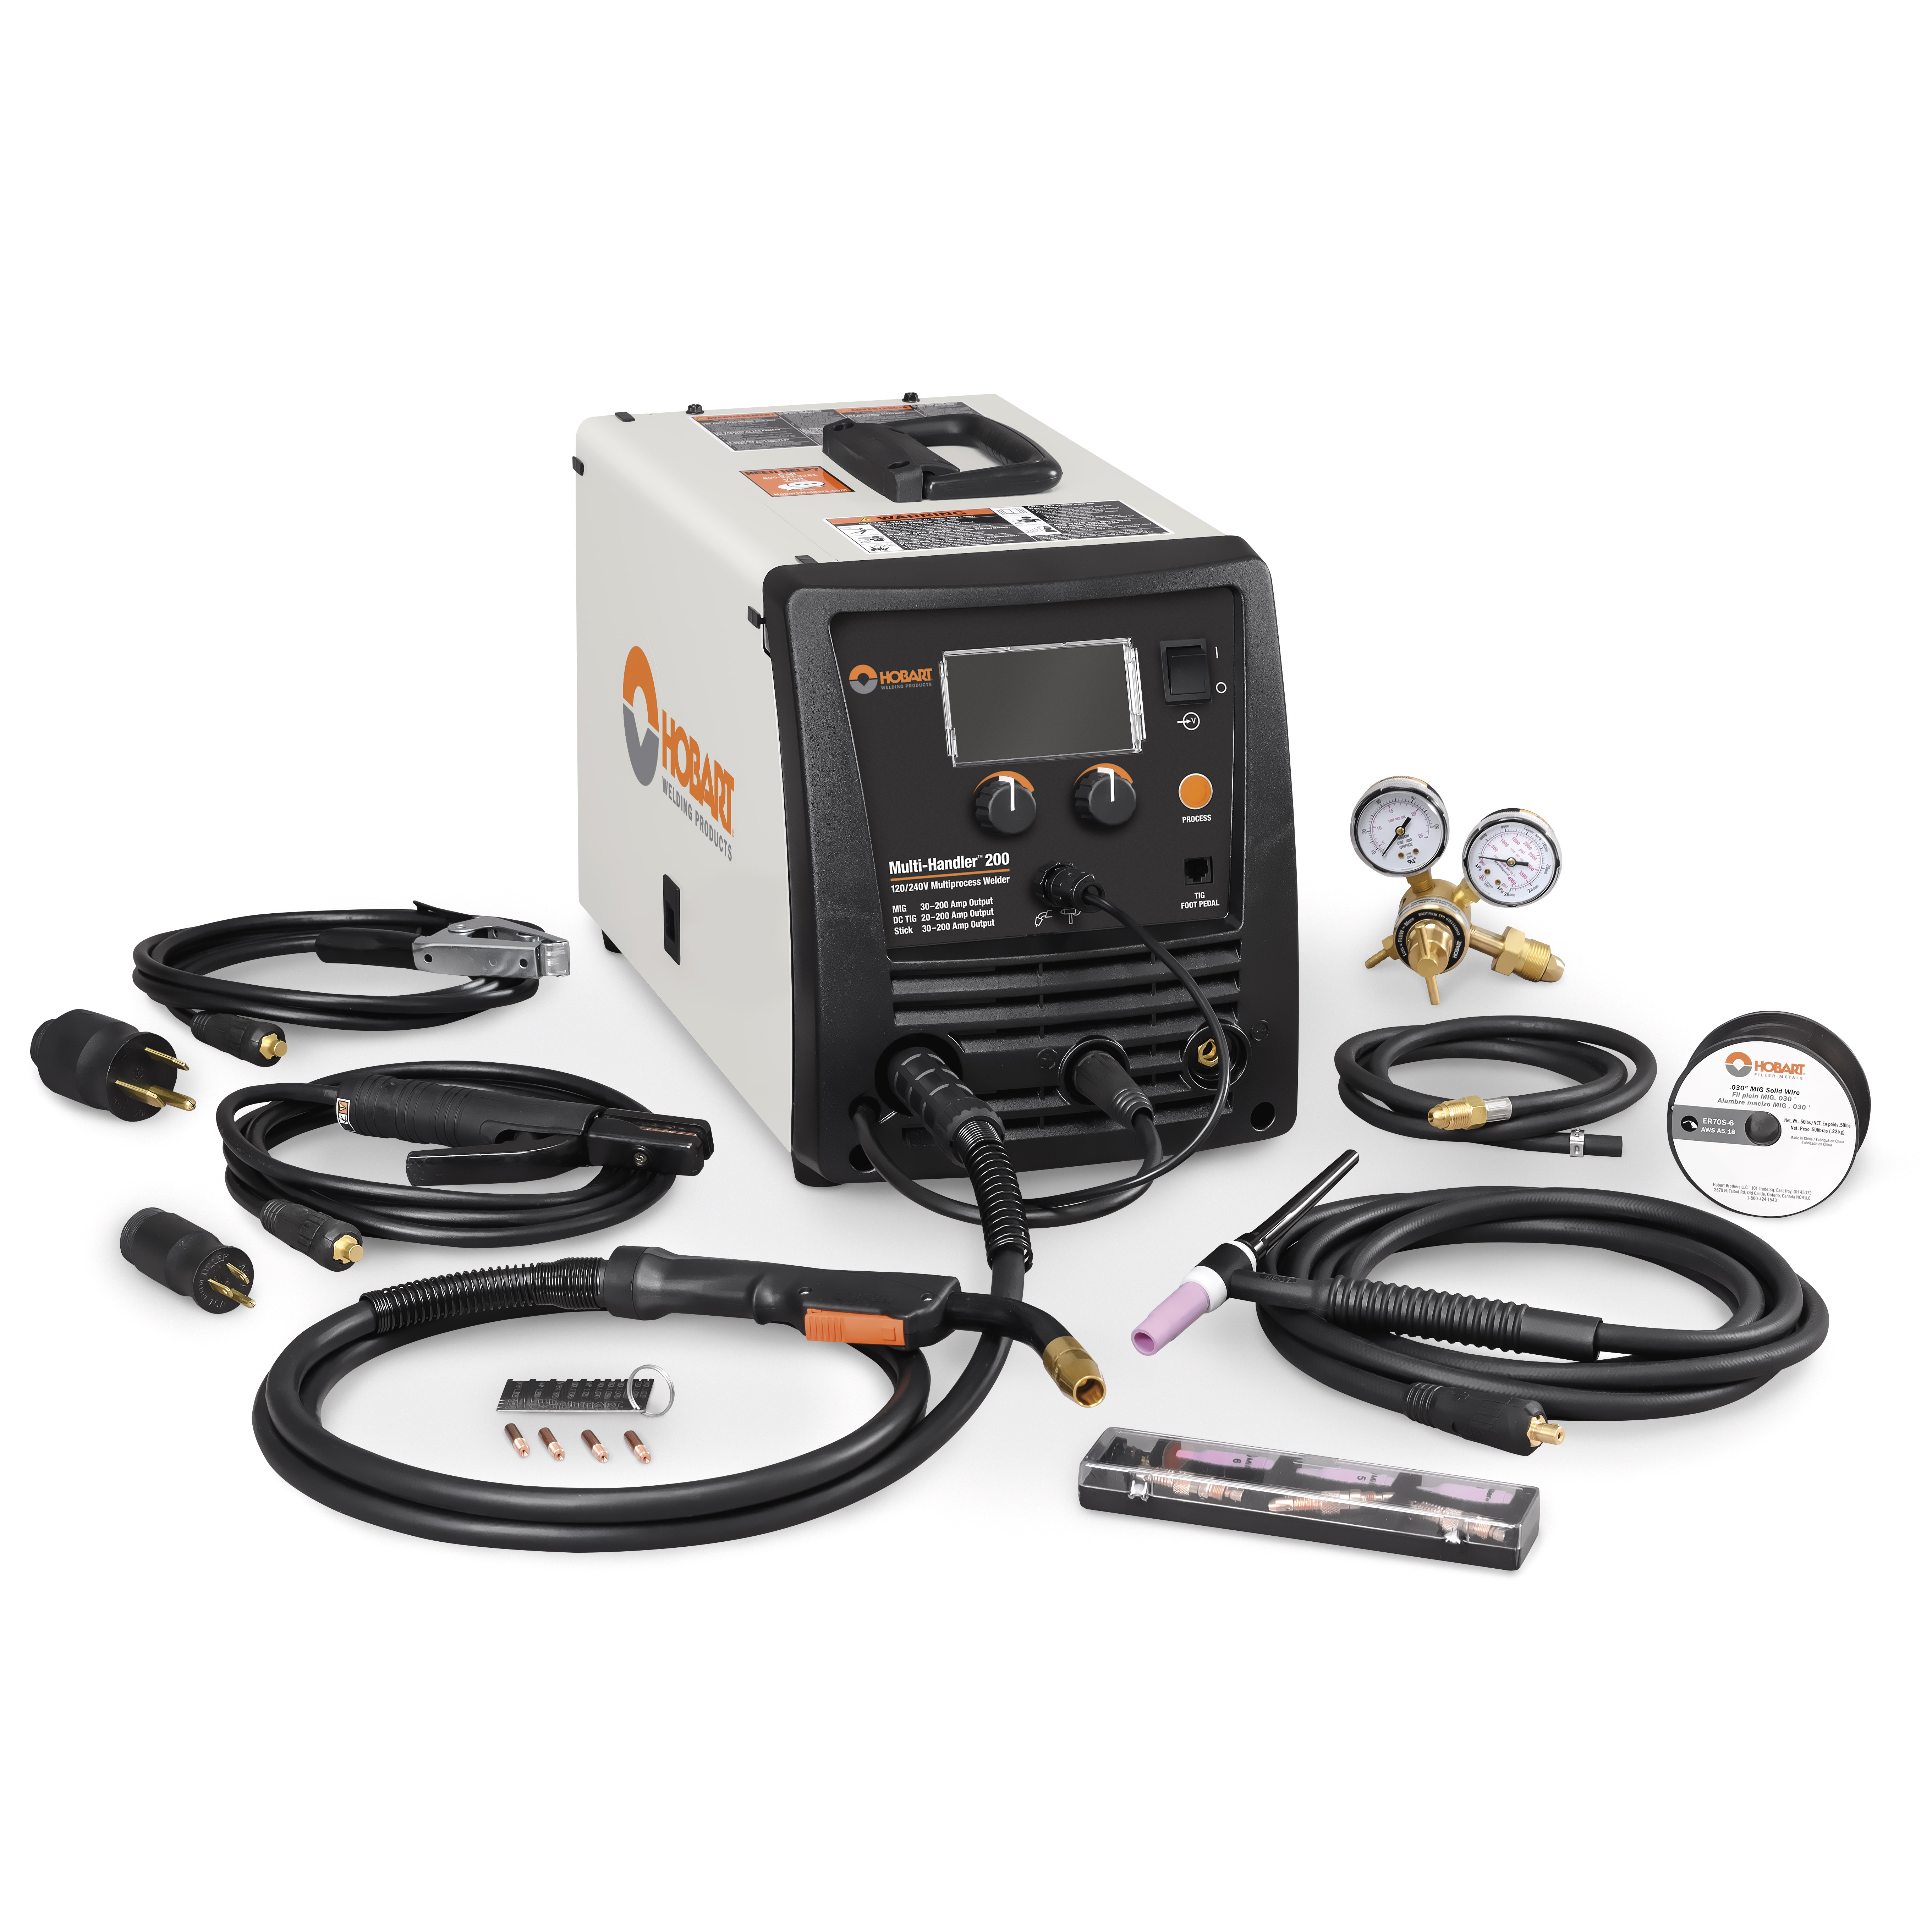 Small Cable Reel Racks Starter Kit 1 Online USA